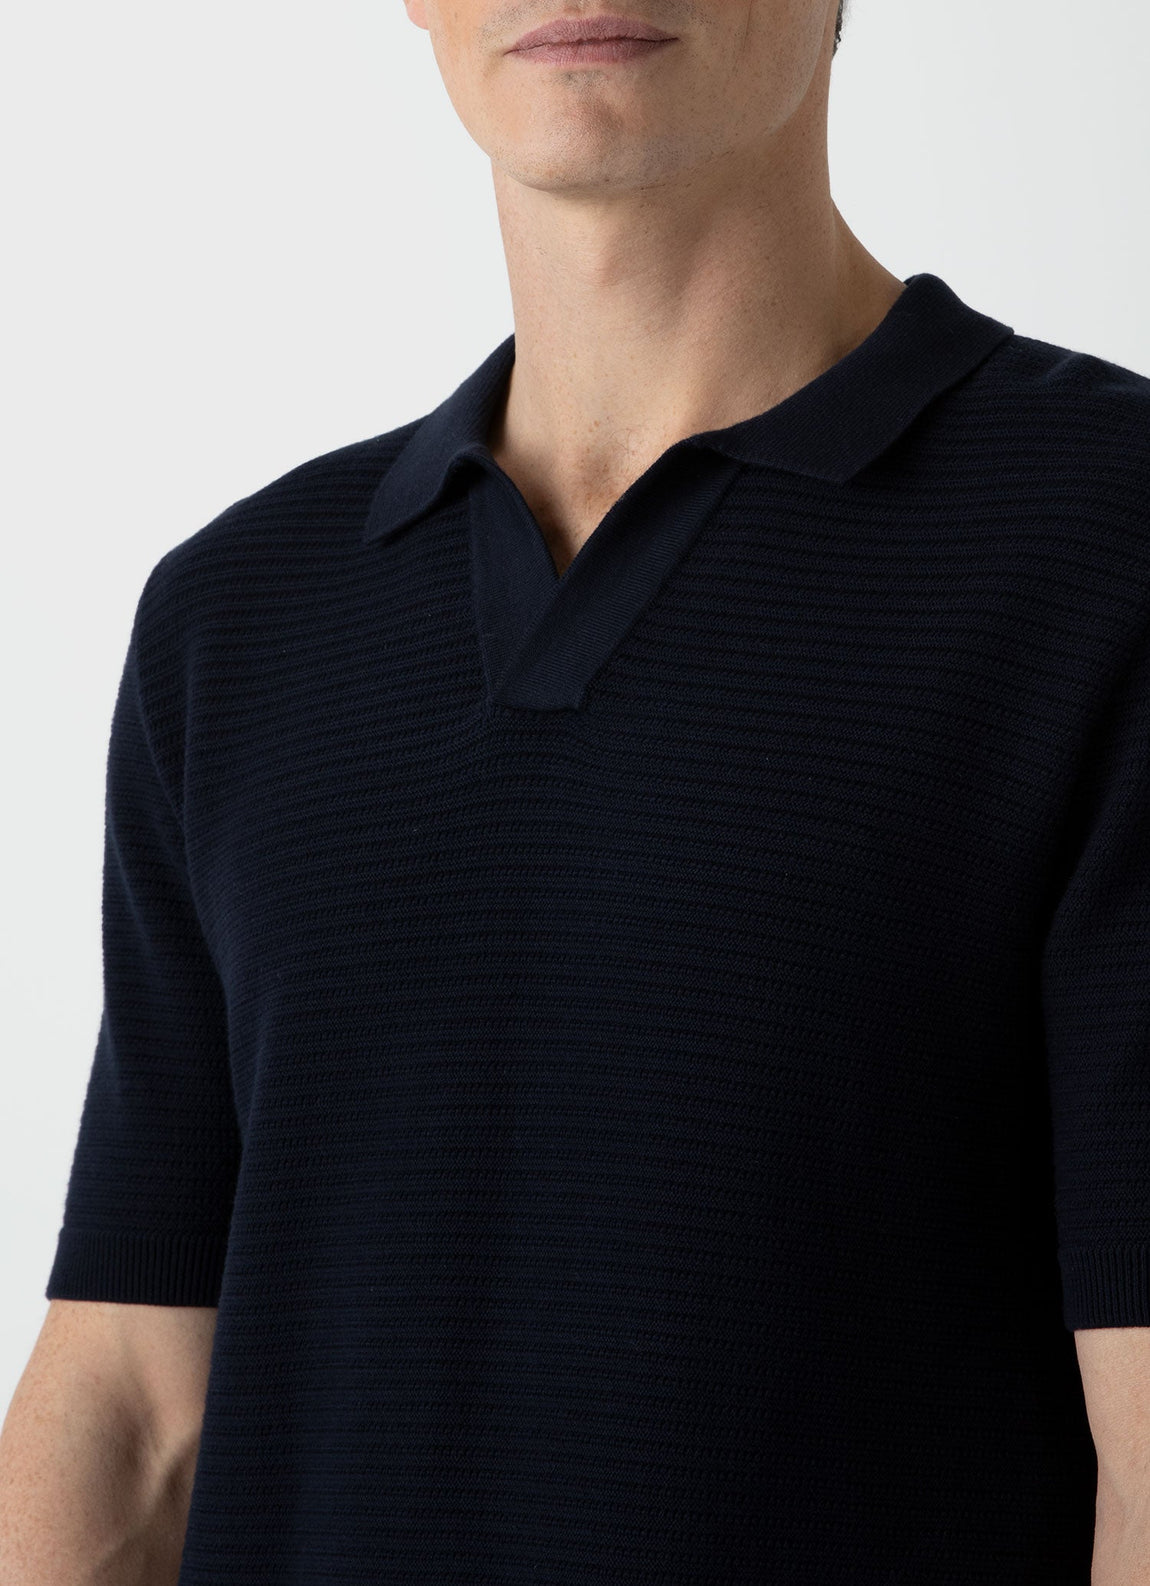 Men's Open Textured Polo Shirt in Navy | Sunspel